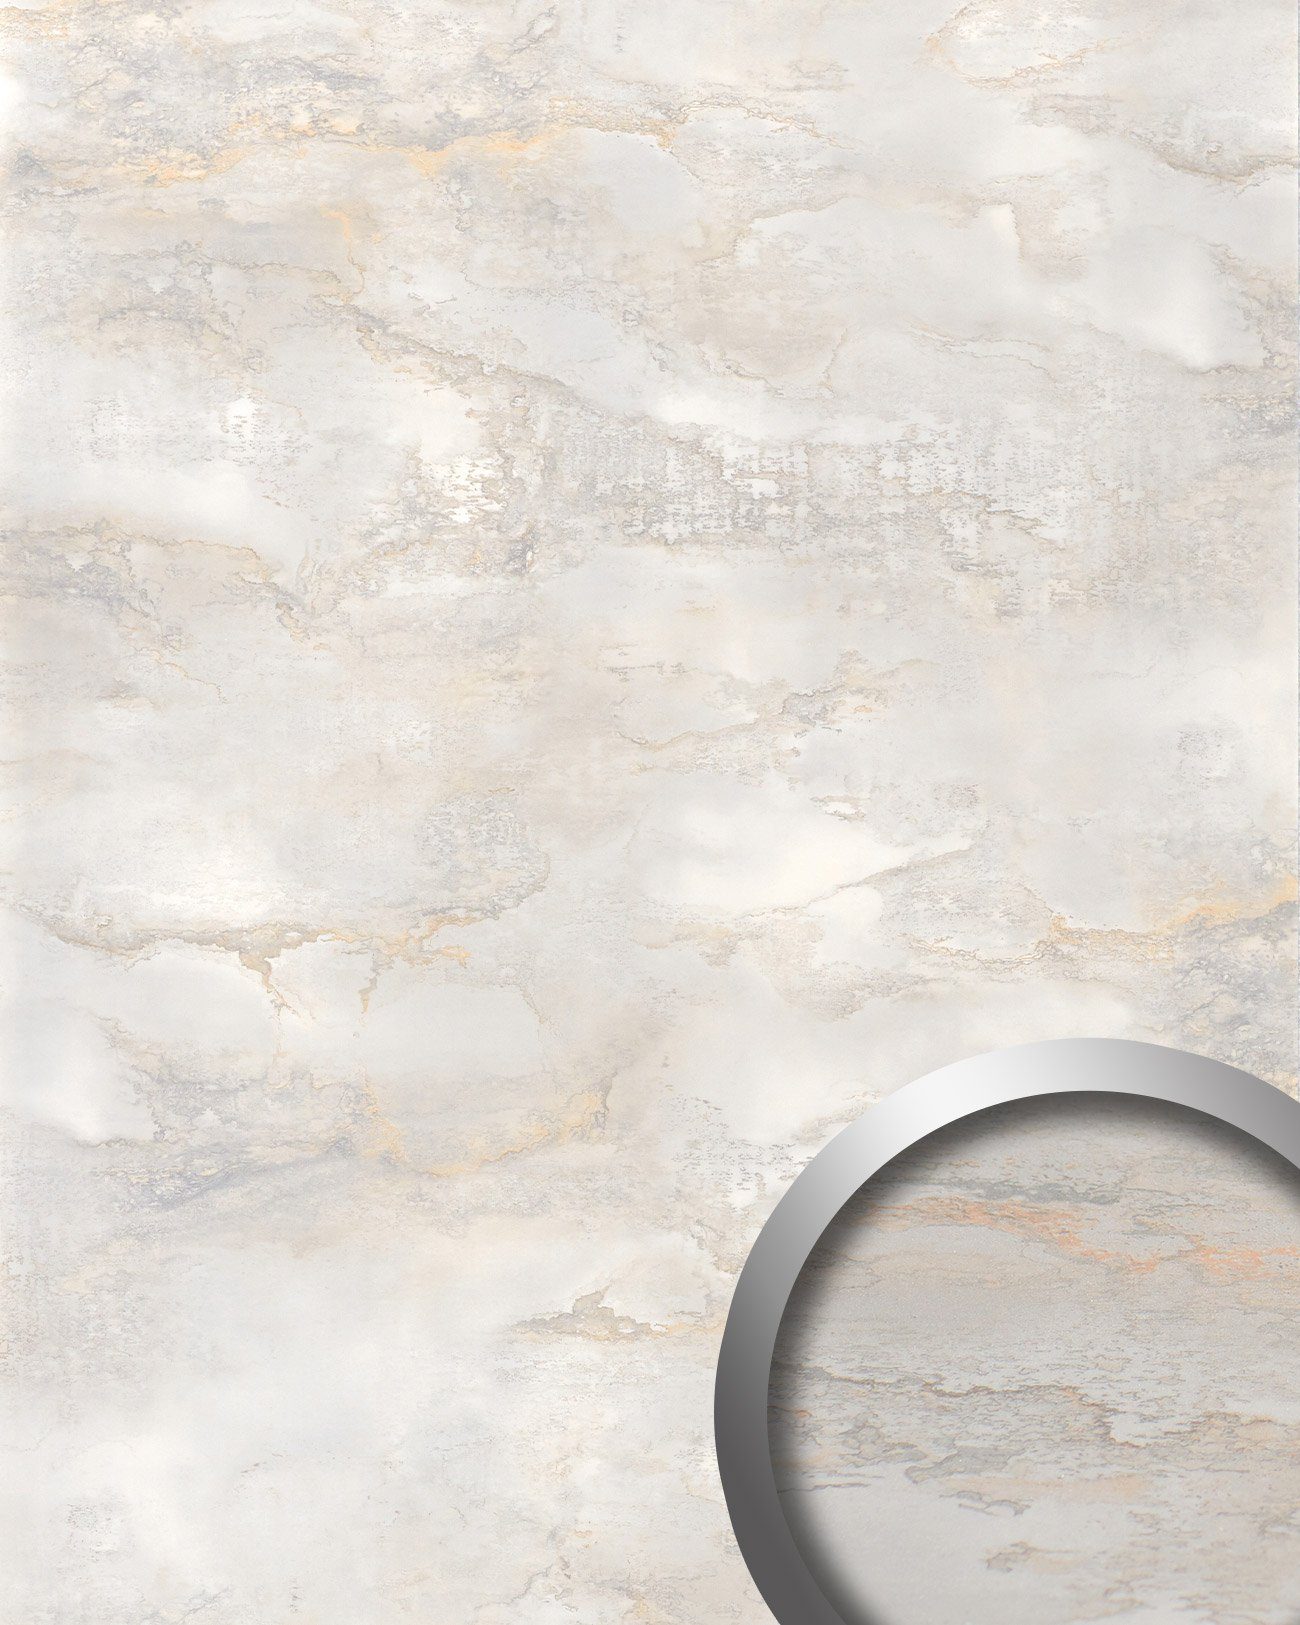 Wallface Dekorpaneele 22634-SA, BxL: 100x260 cm, 2.6 qm, (Dekorpaneel, 1-tlg., Wandverkleidung in Marmor-Optik) selbstklebend, weiß, creme-weiß, seidenmatt, glatt